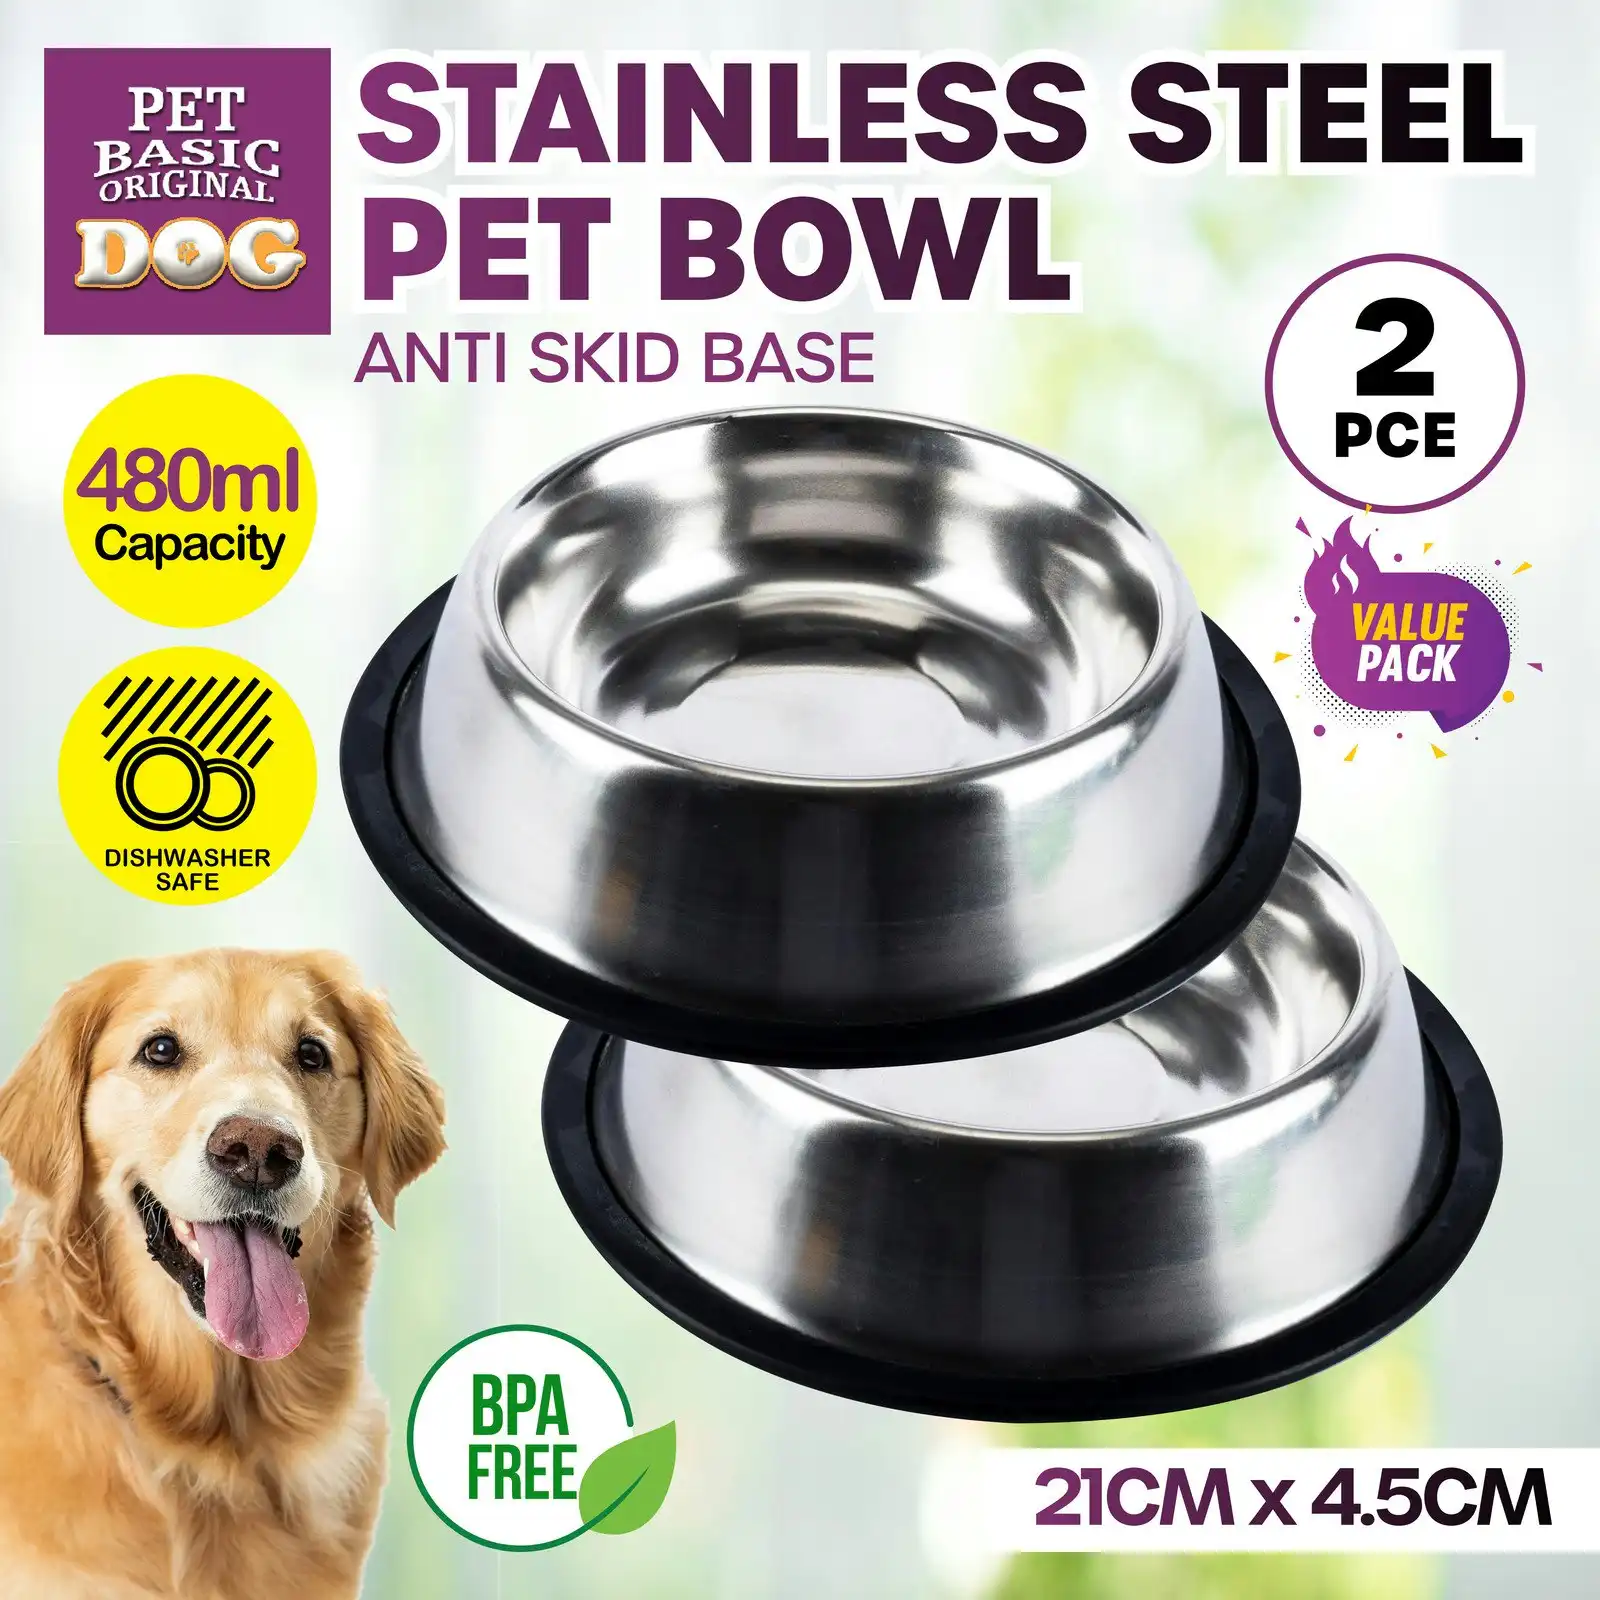 Pet Basic 2PCE Stainless Steel Pet Bowl Non Slip Base Dishwasher Safe 480ml